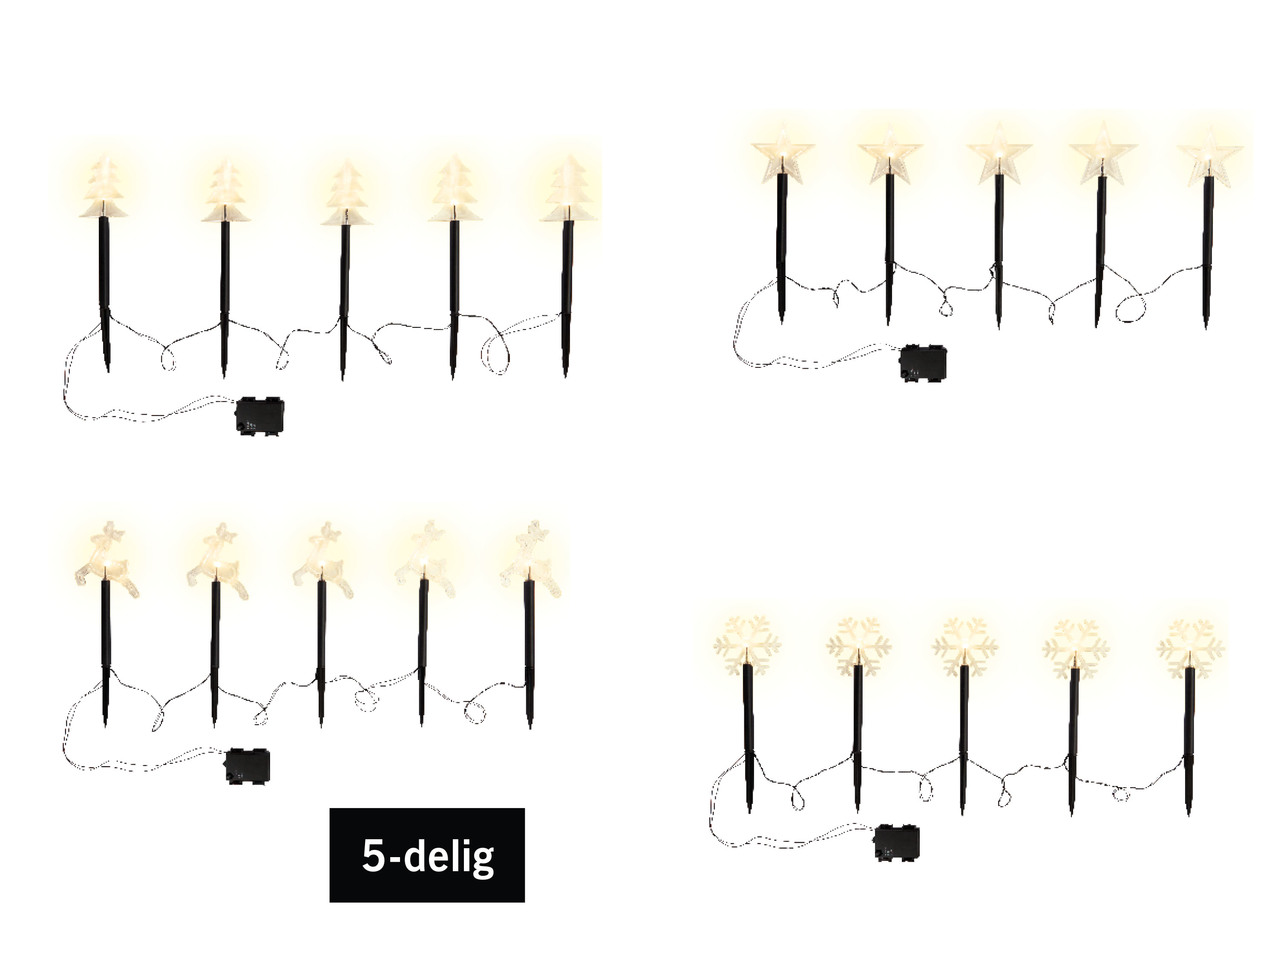 LED-lampen